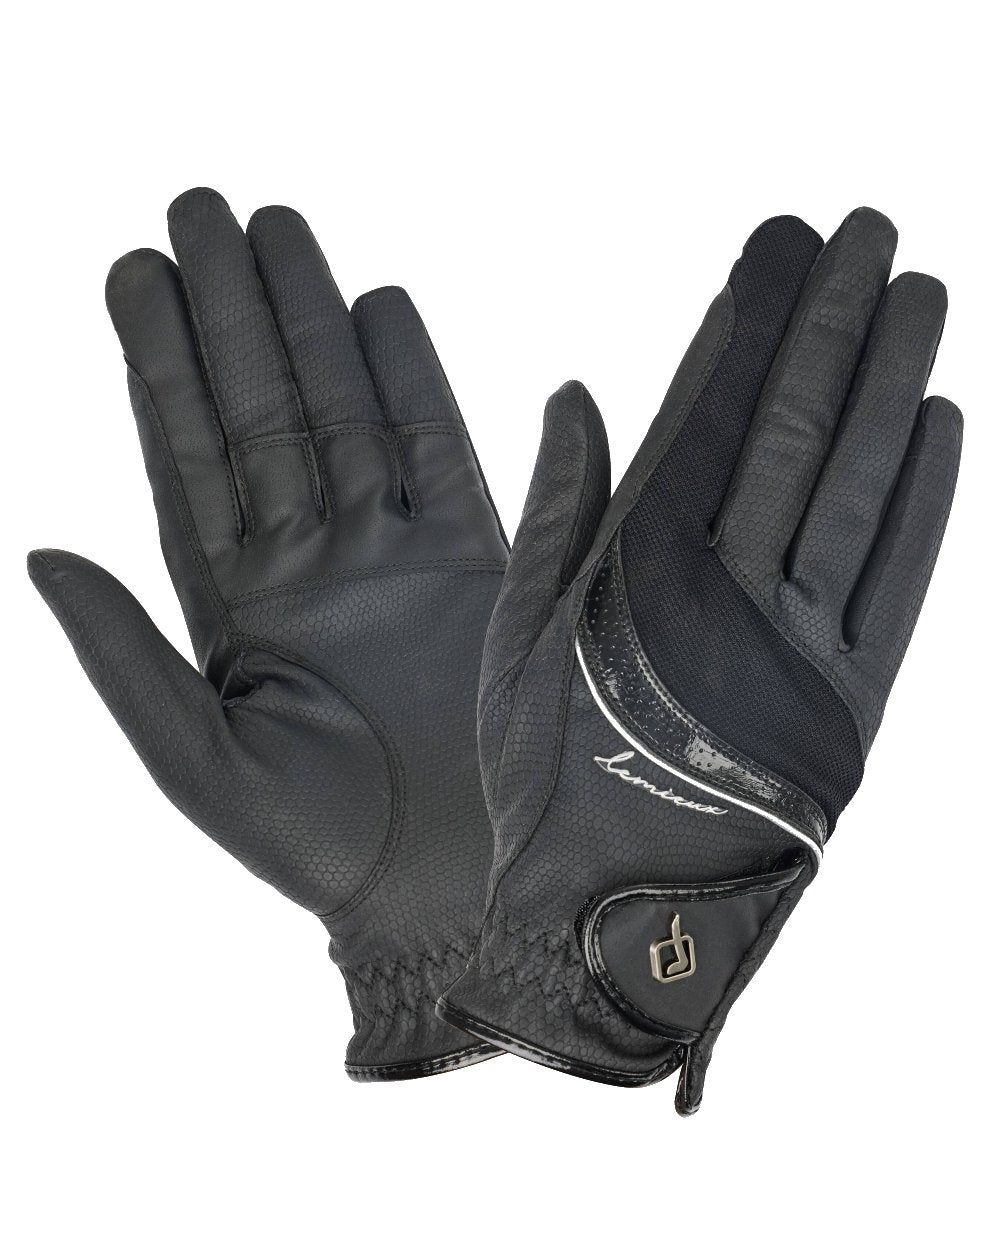 Black coloured LeMieux Competition Gloves on white background 